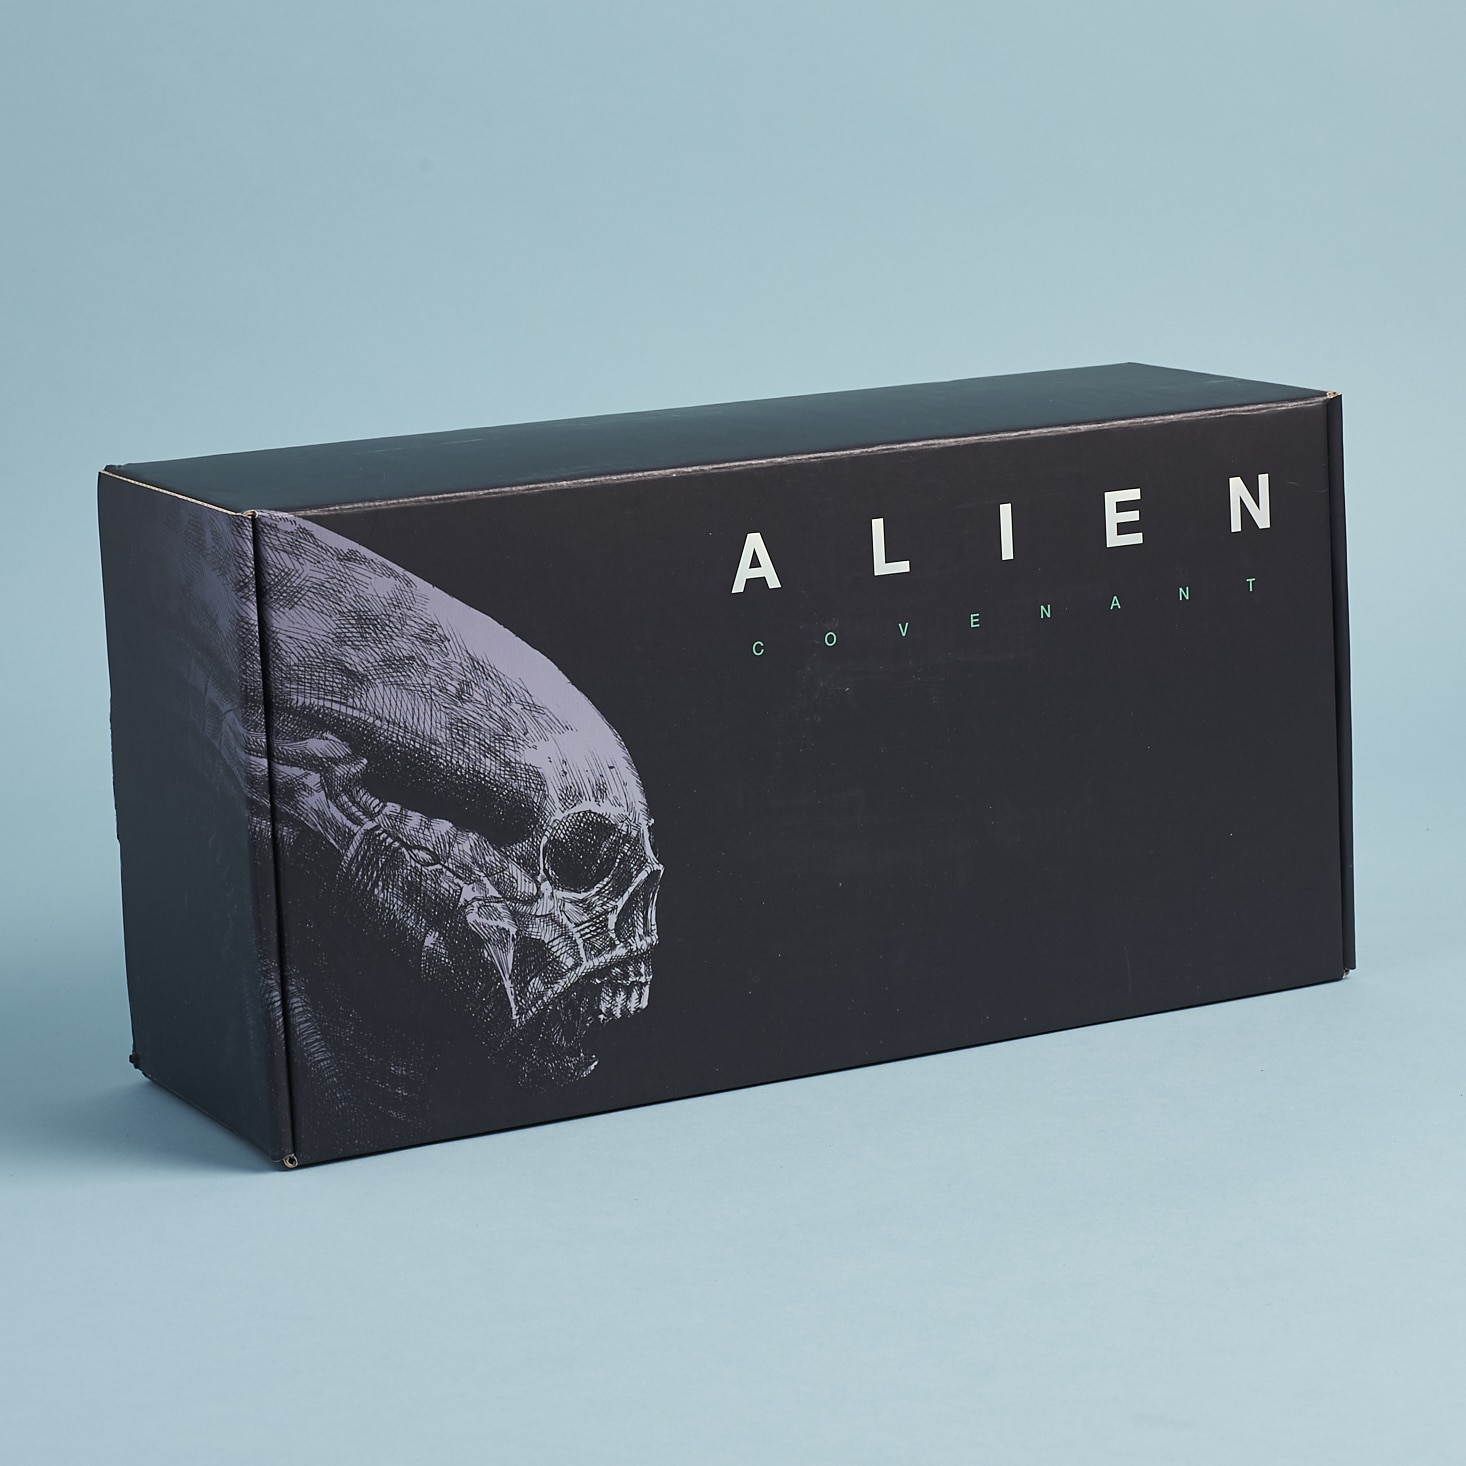 A-Box Subscription Box Review – Alien Covenant Box!